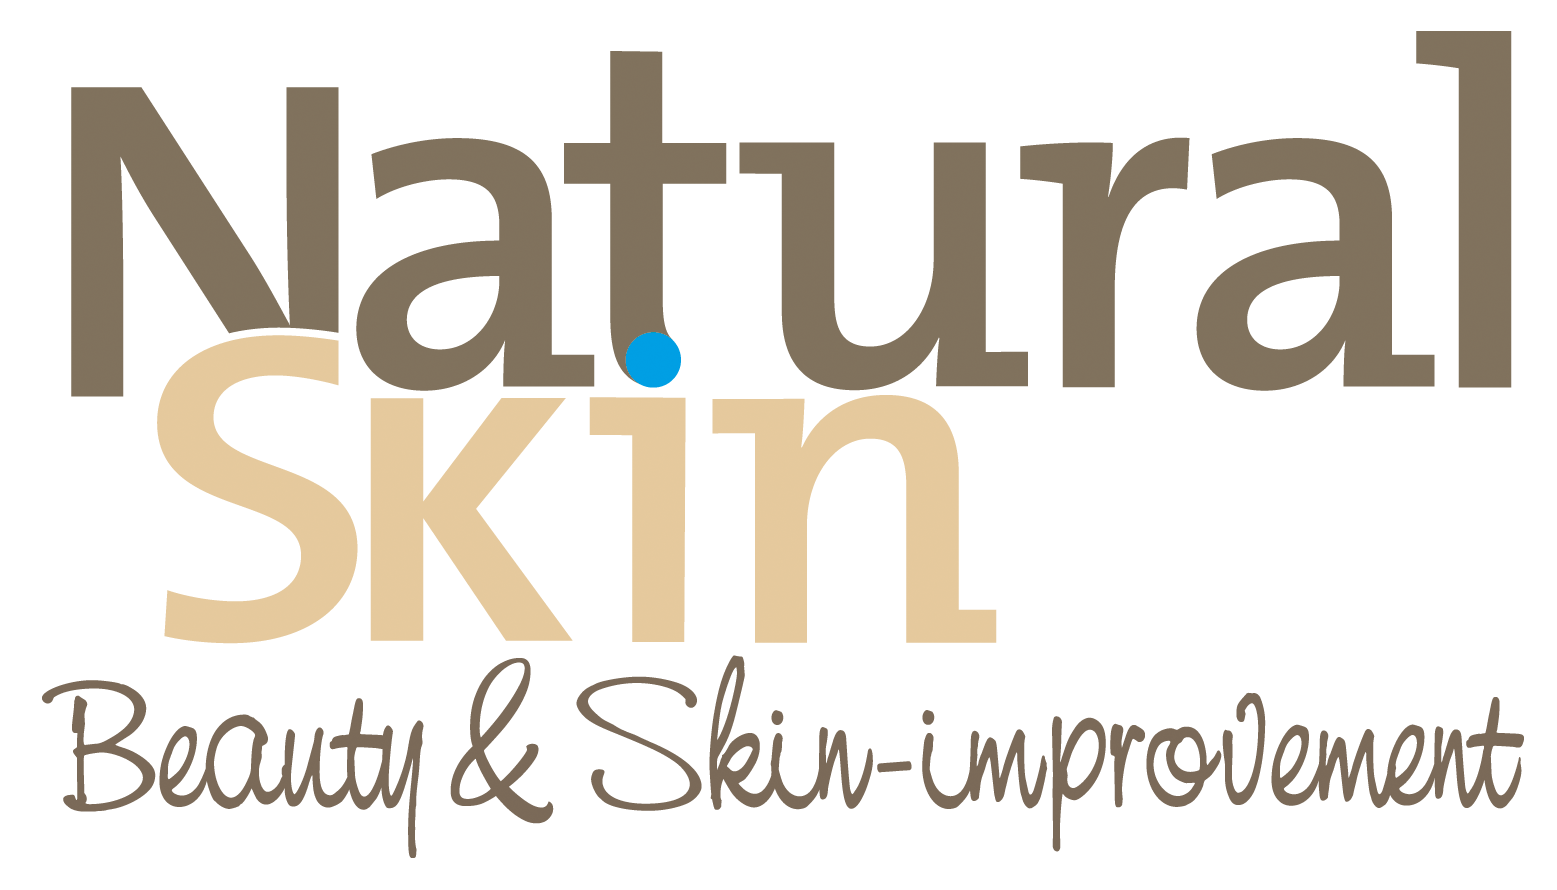 Natural Skin